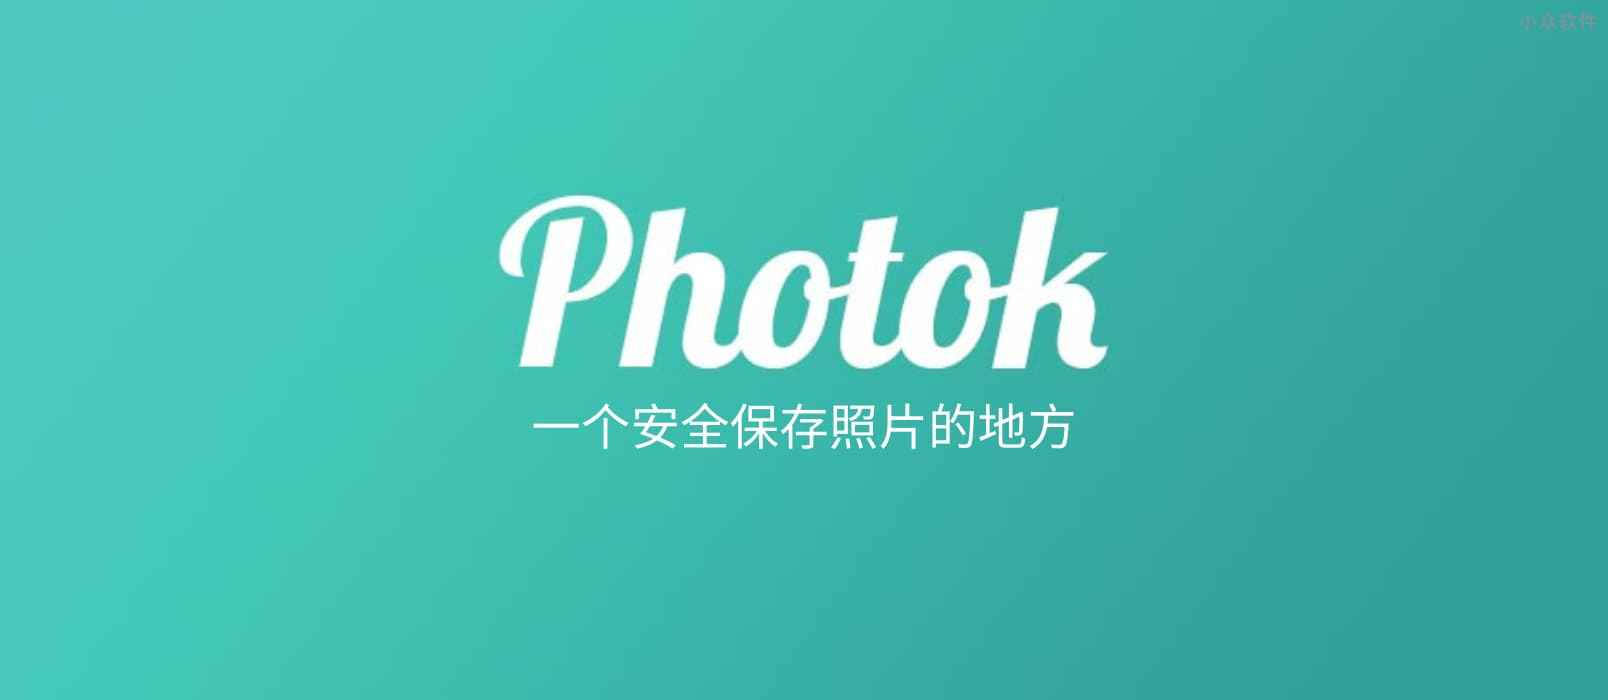 Photok - 一个加密存放照片的安全地方[Android]